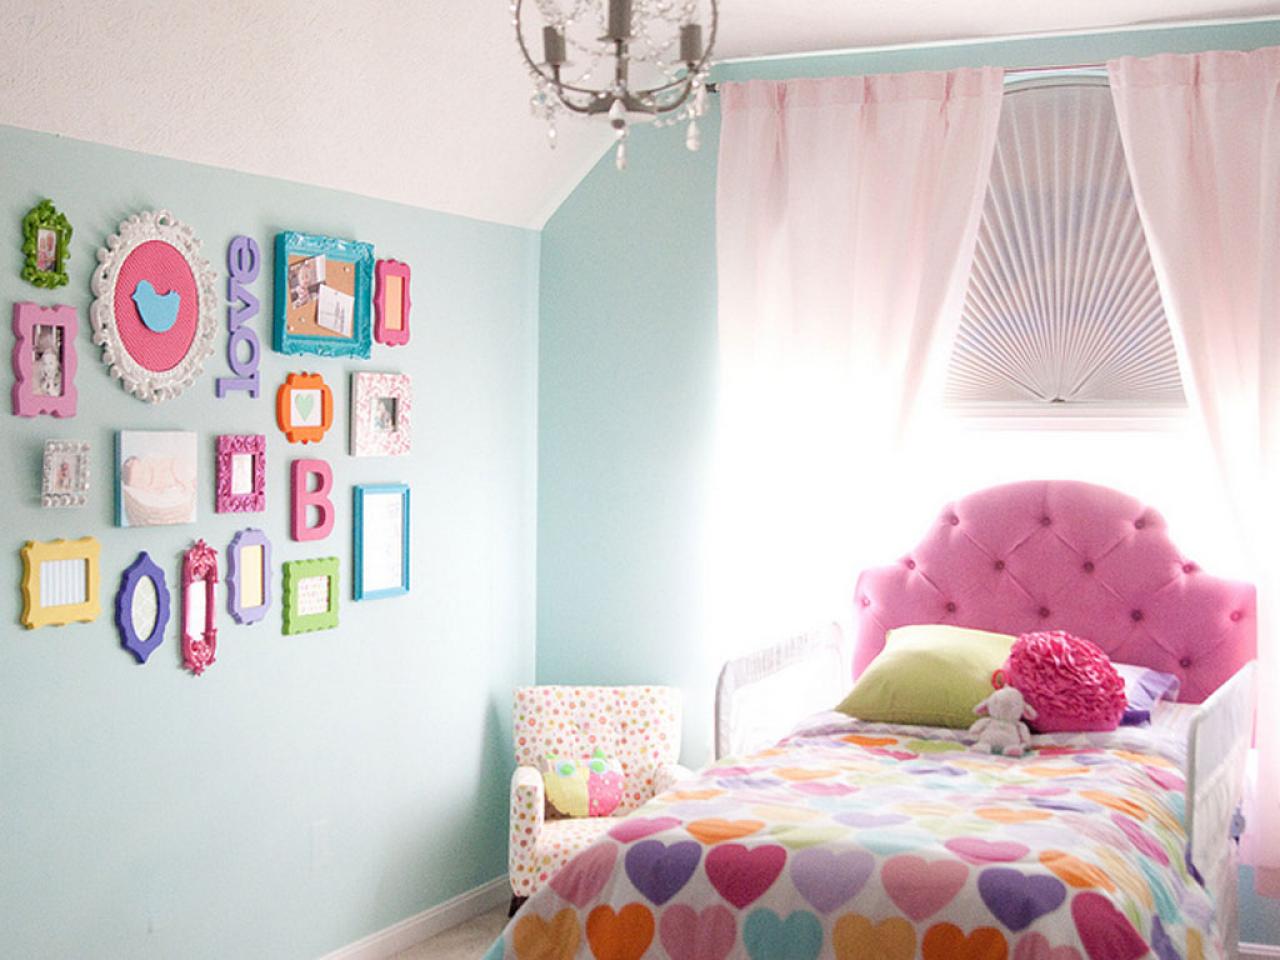 Affordable Kids' Room Decorating Ideas | HGTV